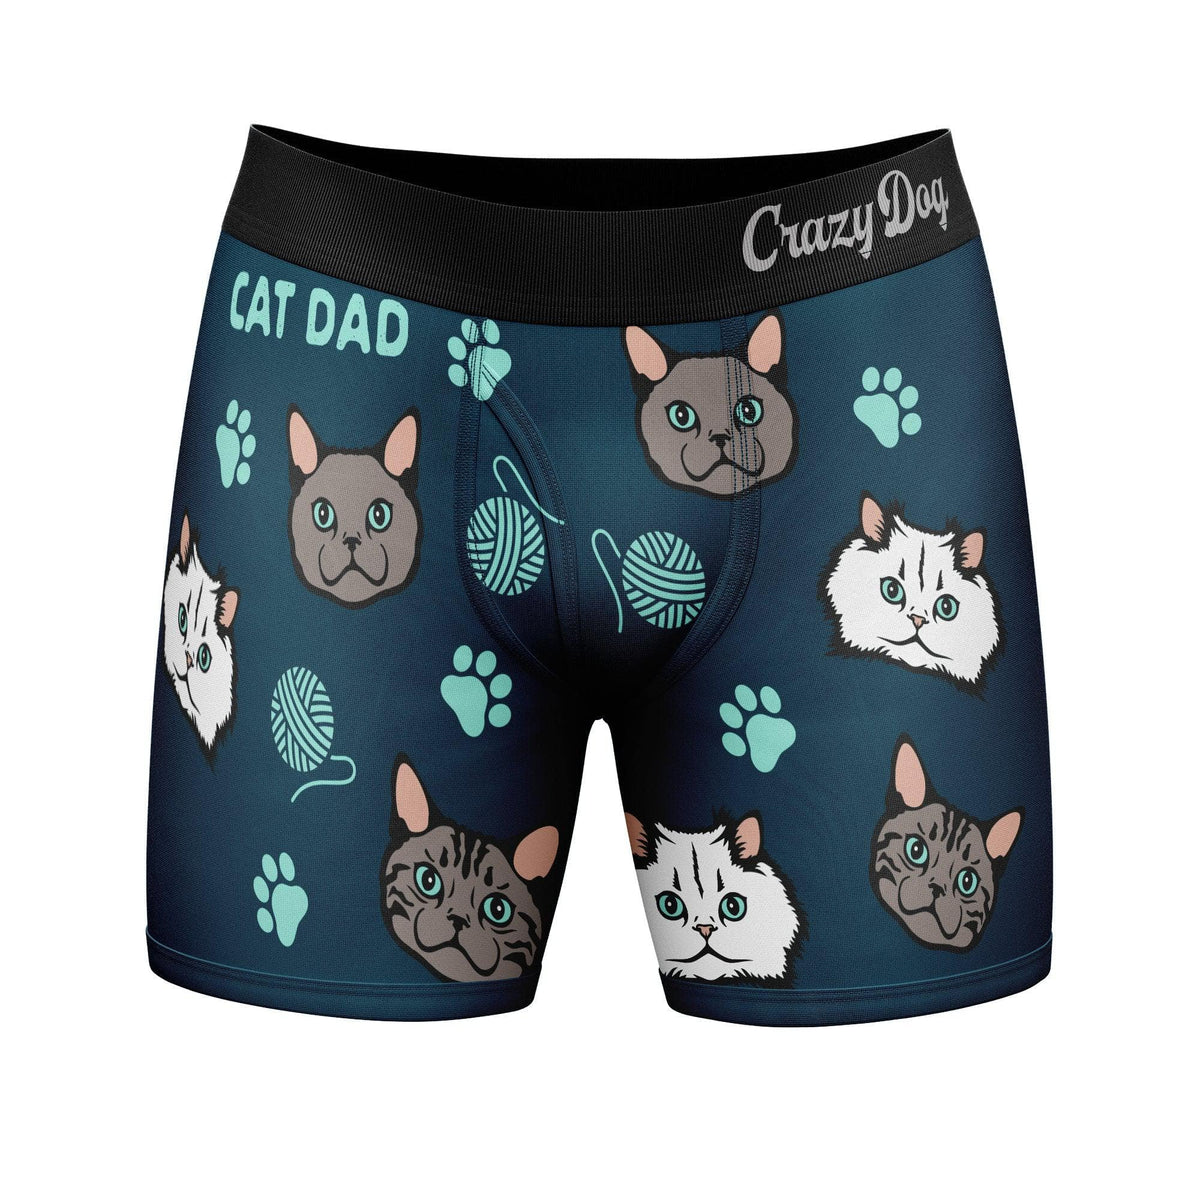 Cat Dad  -  Crazy Dog T-Shirts